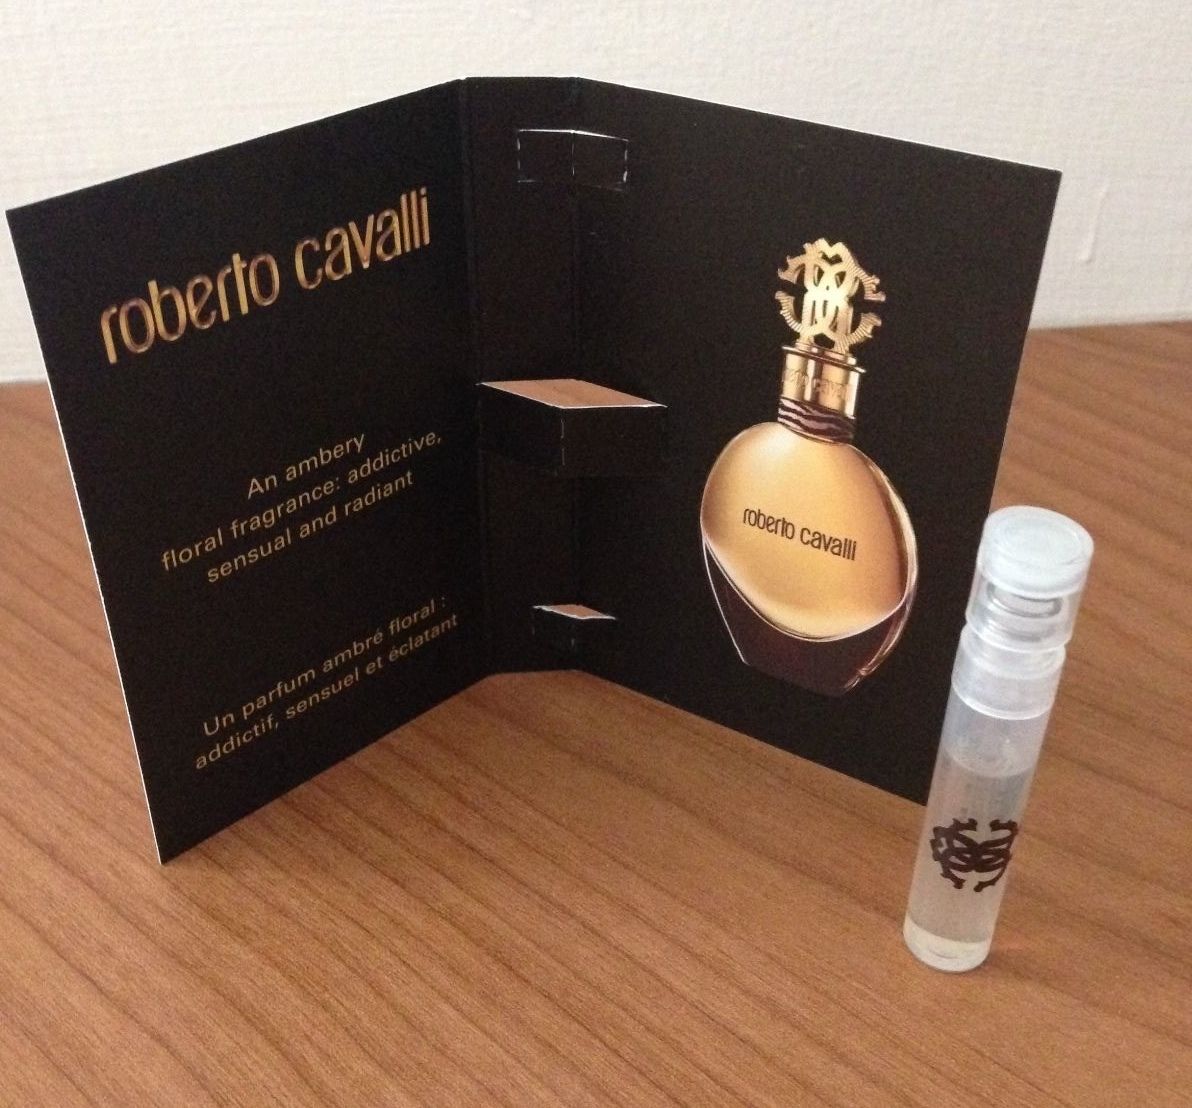 Roberto-Cavalli-Perfume-Samples